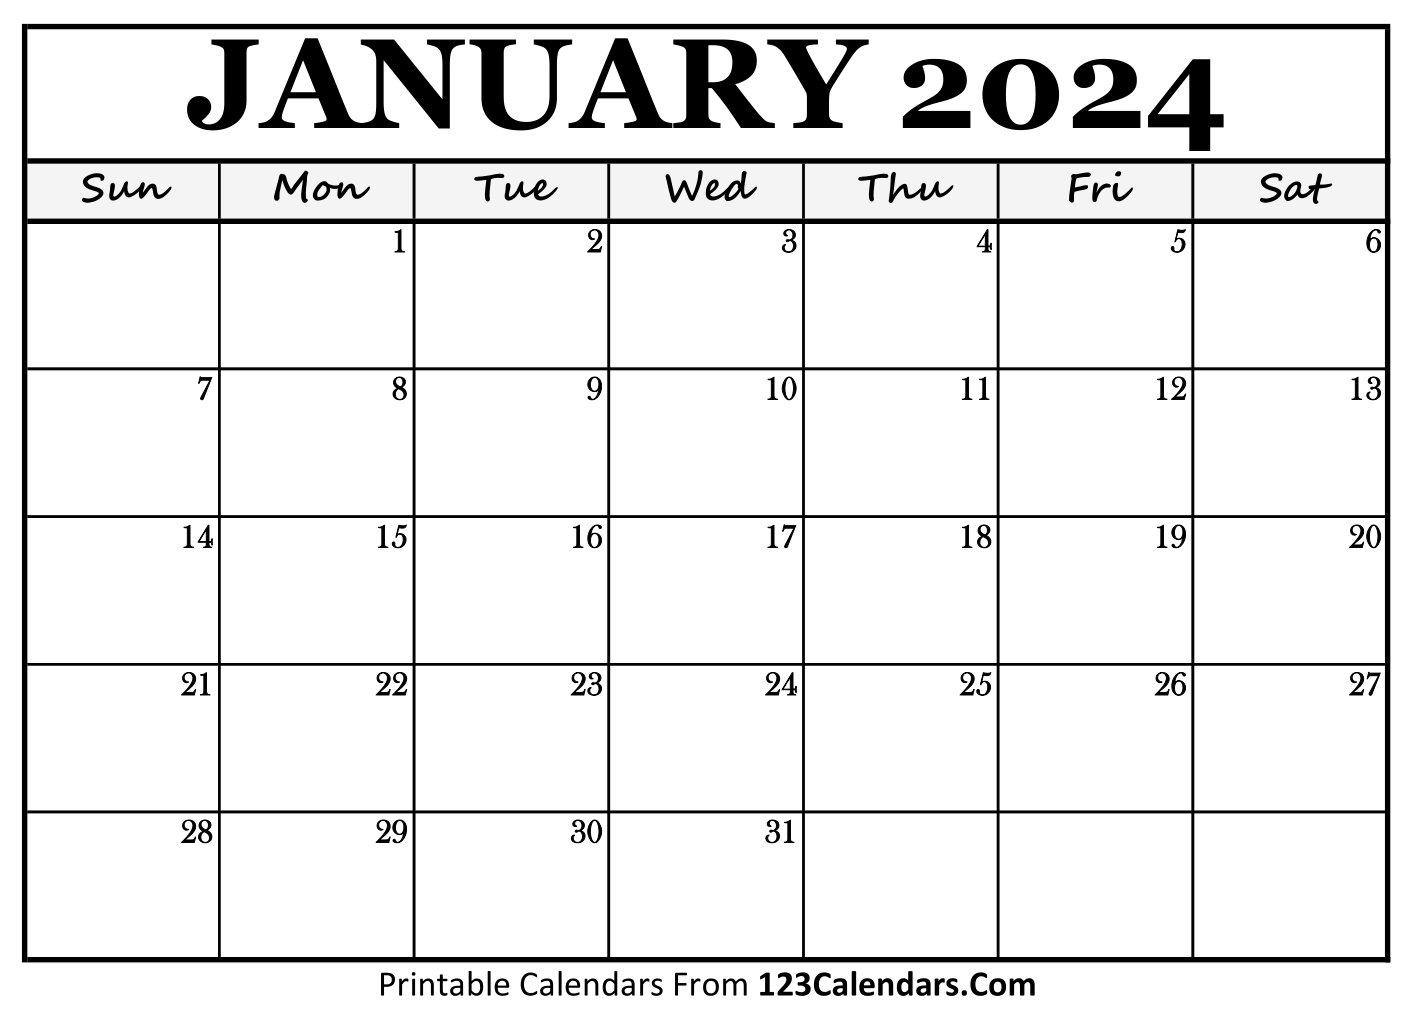 Printable January 2024 Calendar Templates - 123Calendars | Printable January 2024